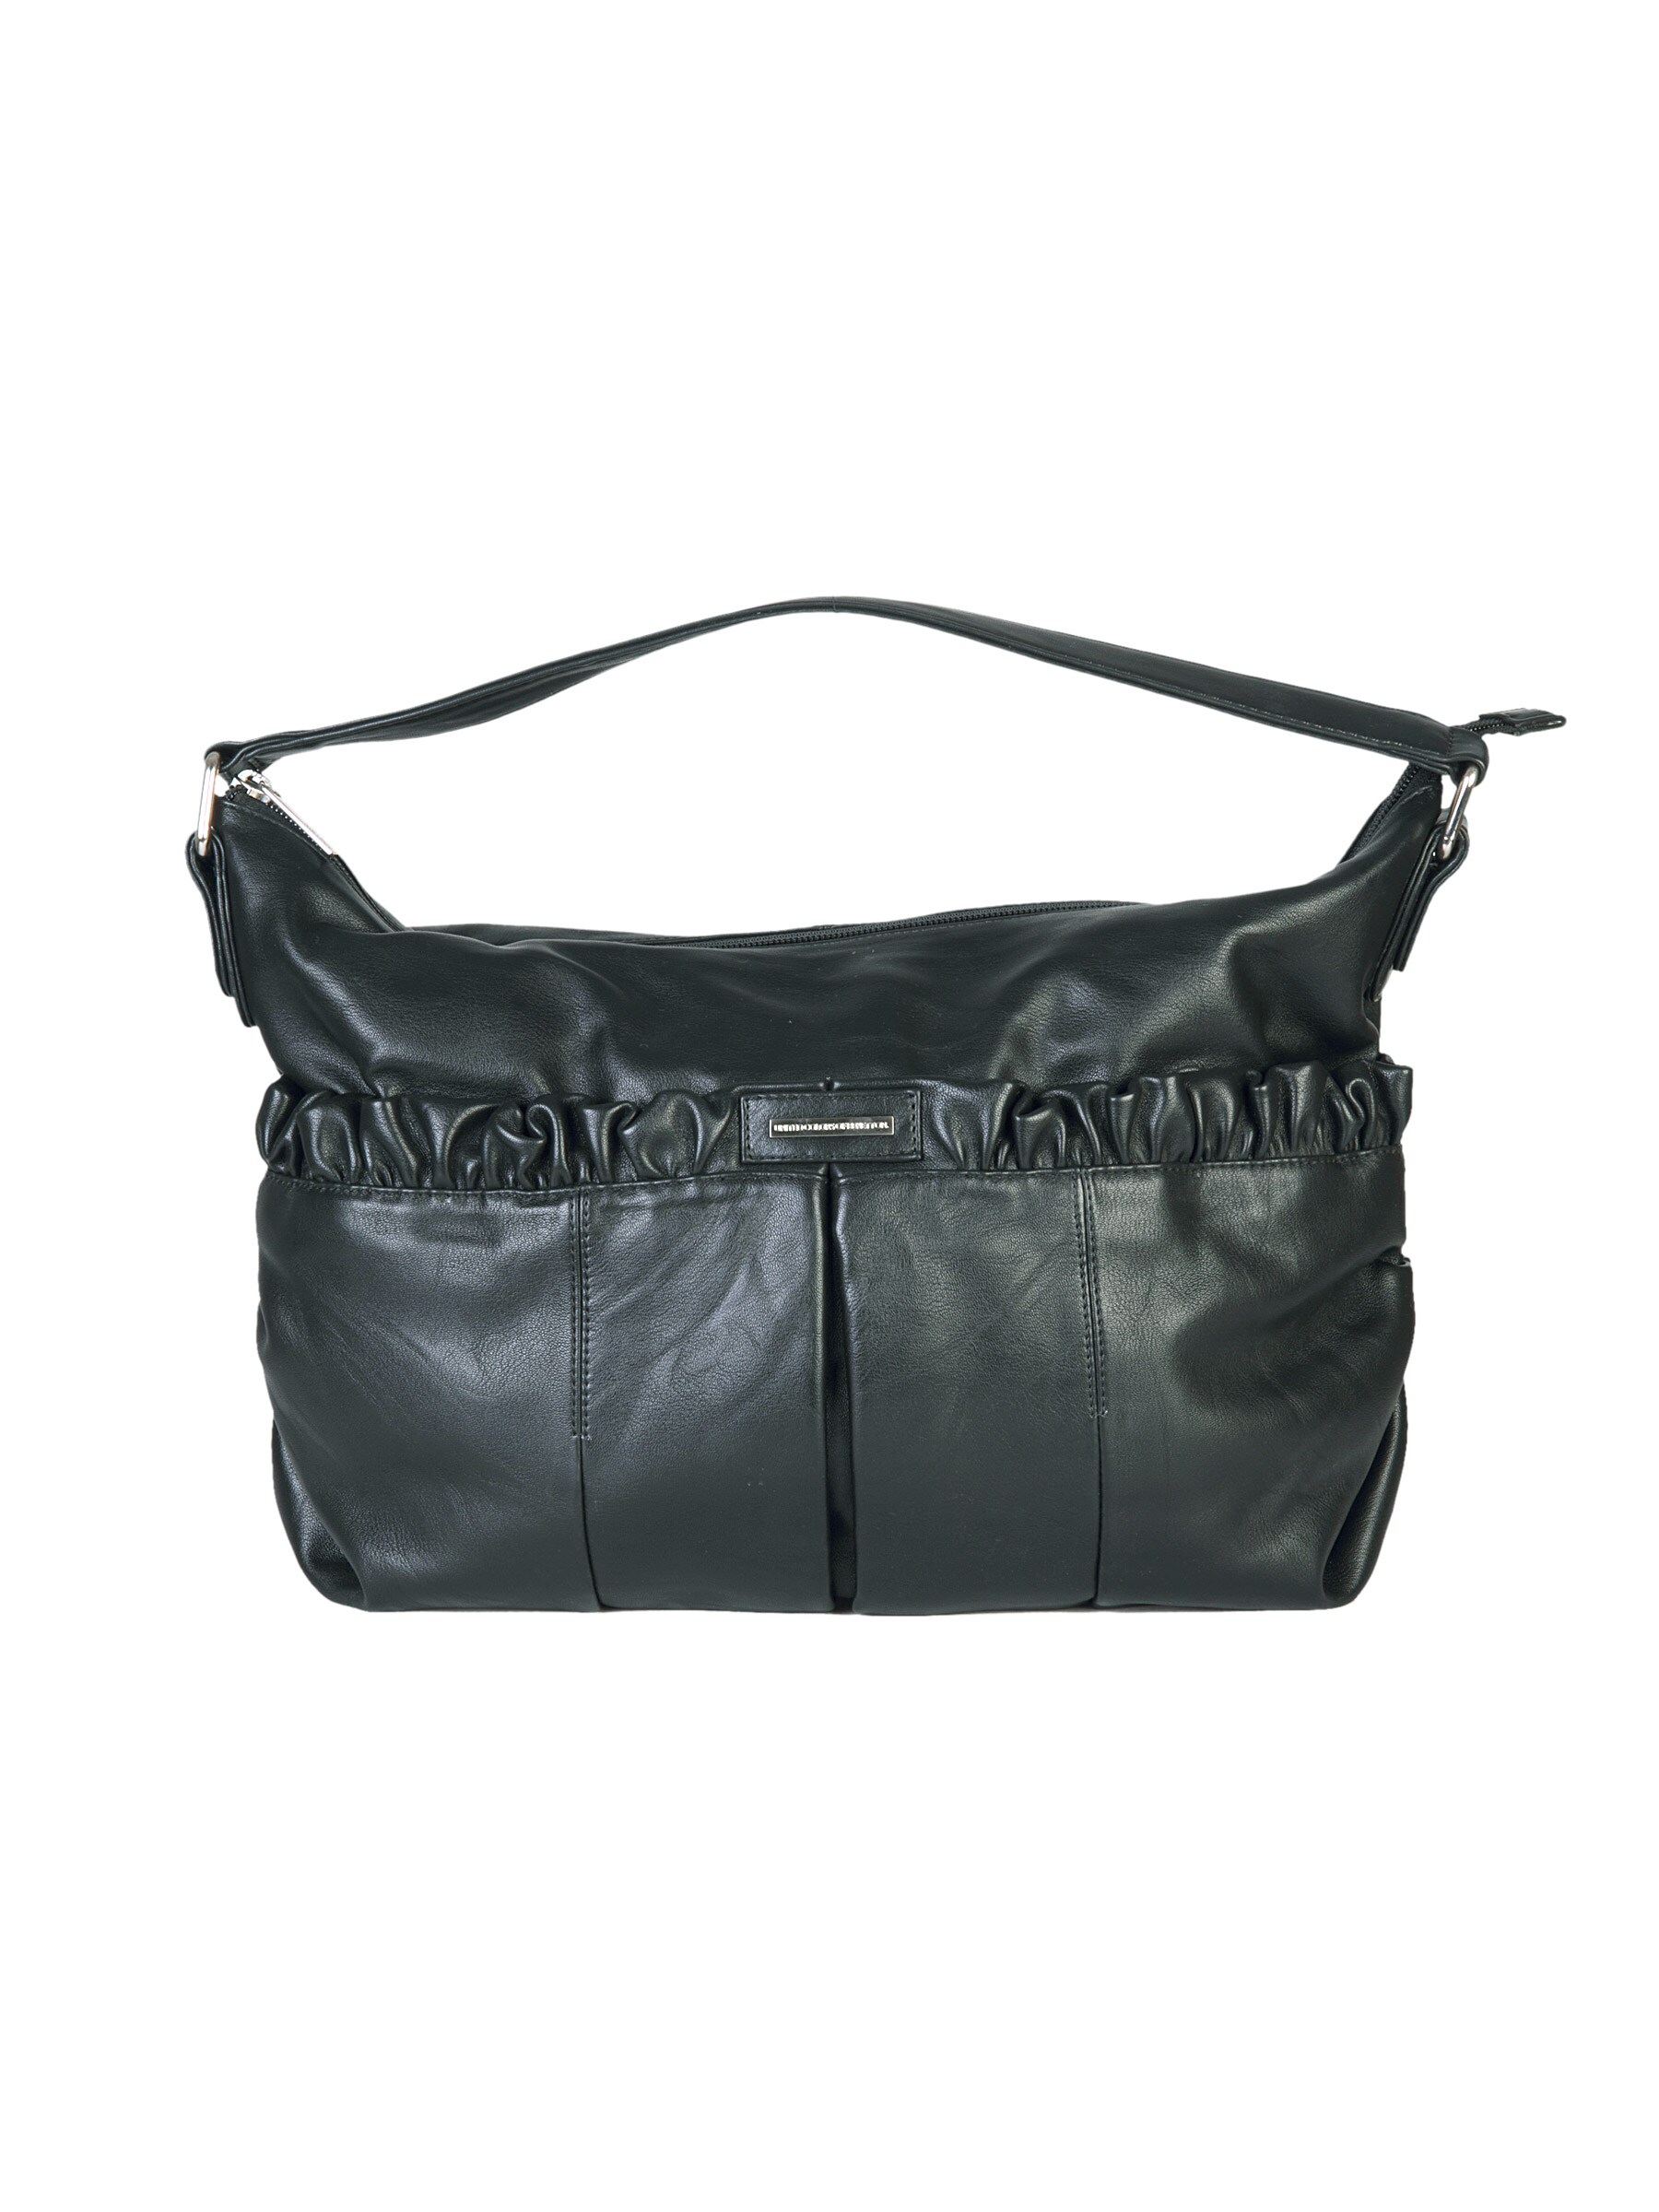 United Colors of Benetton Women Black Handbag